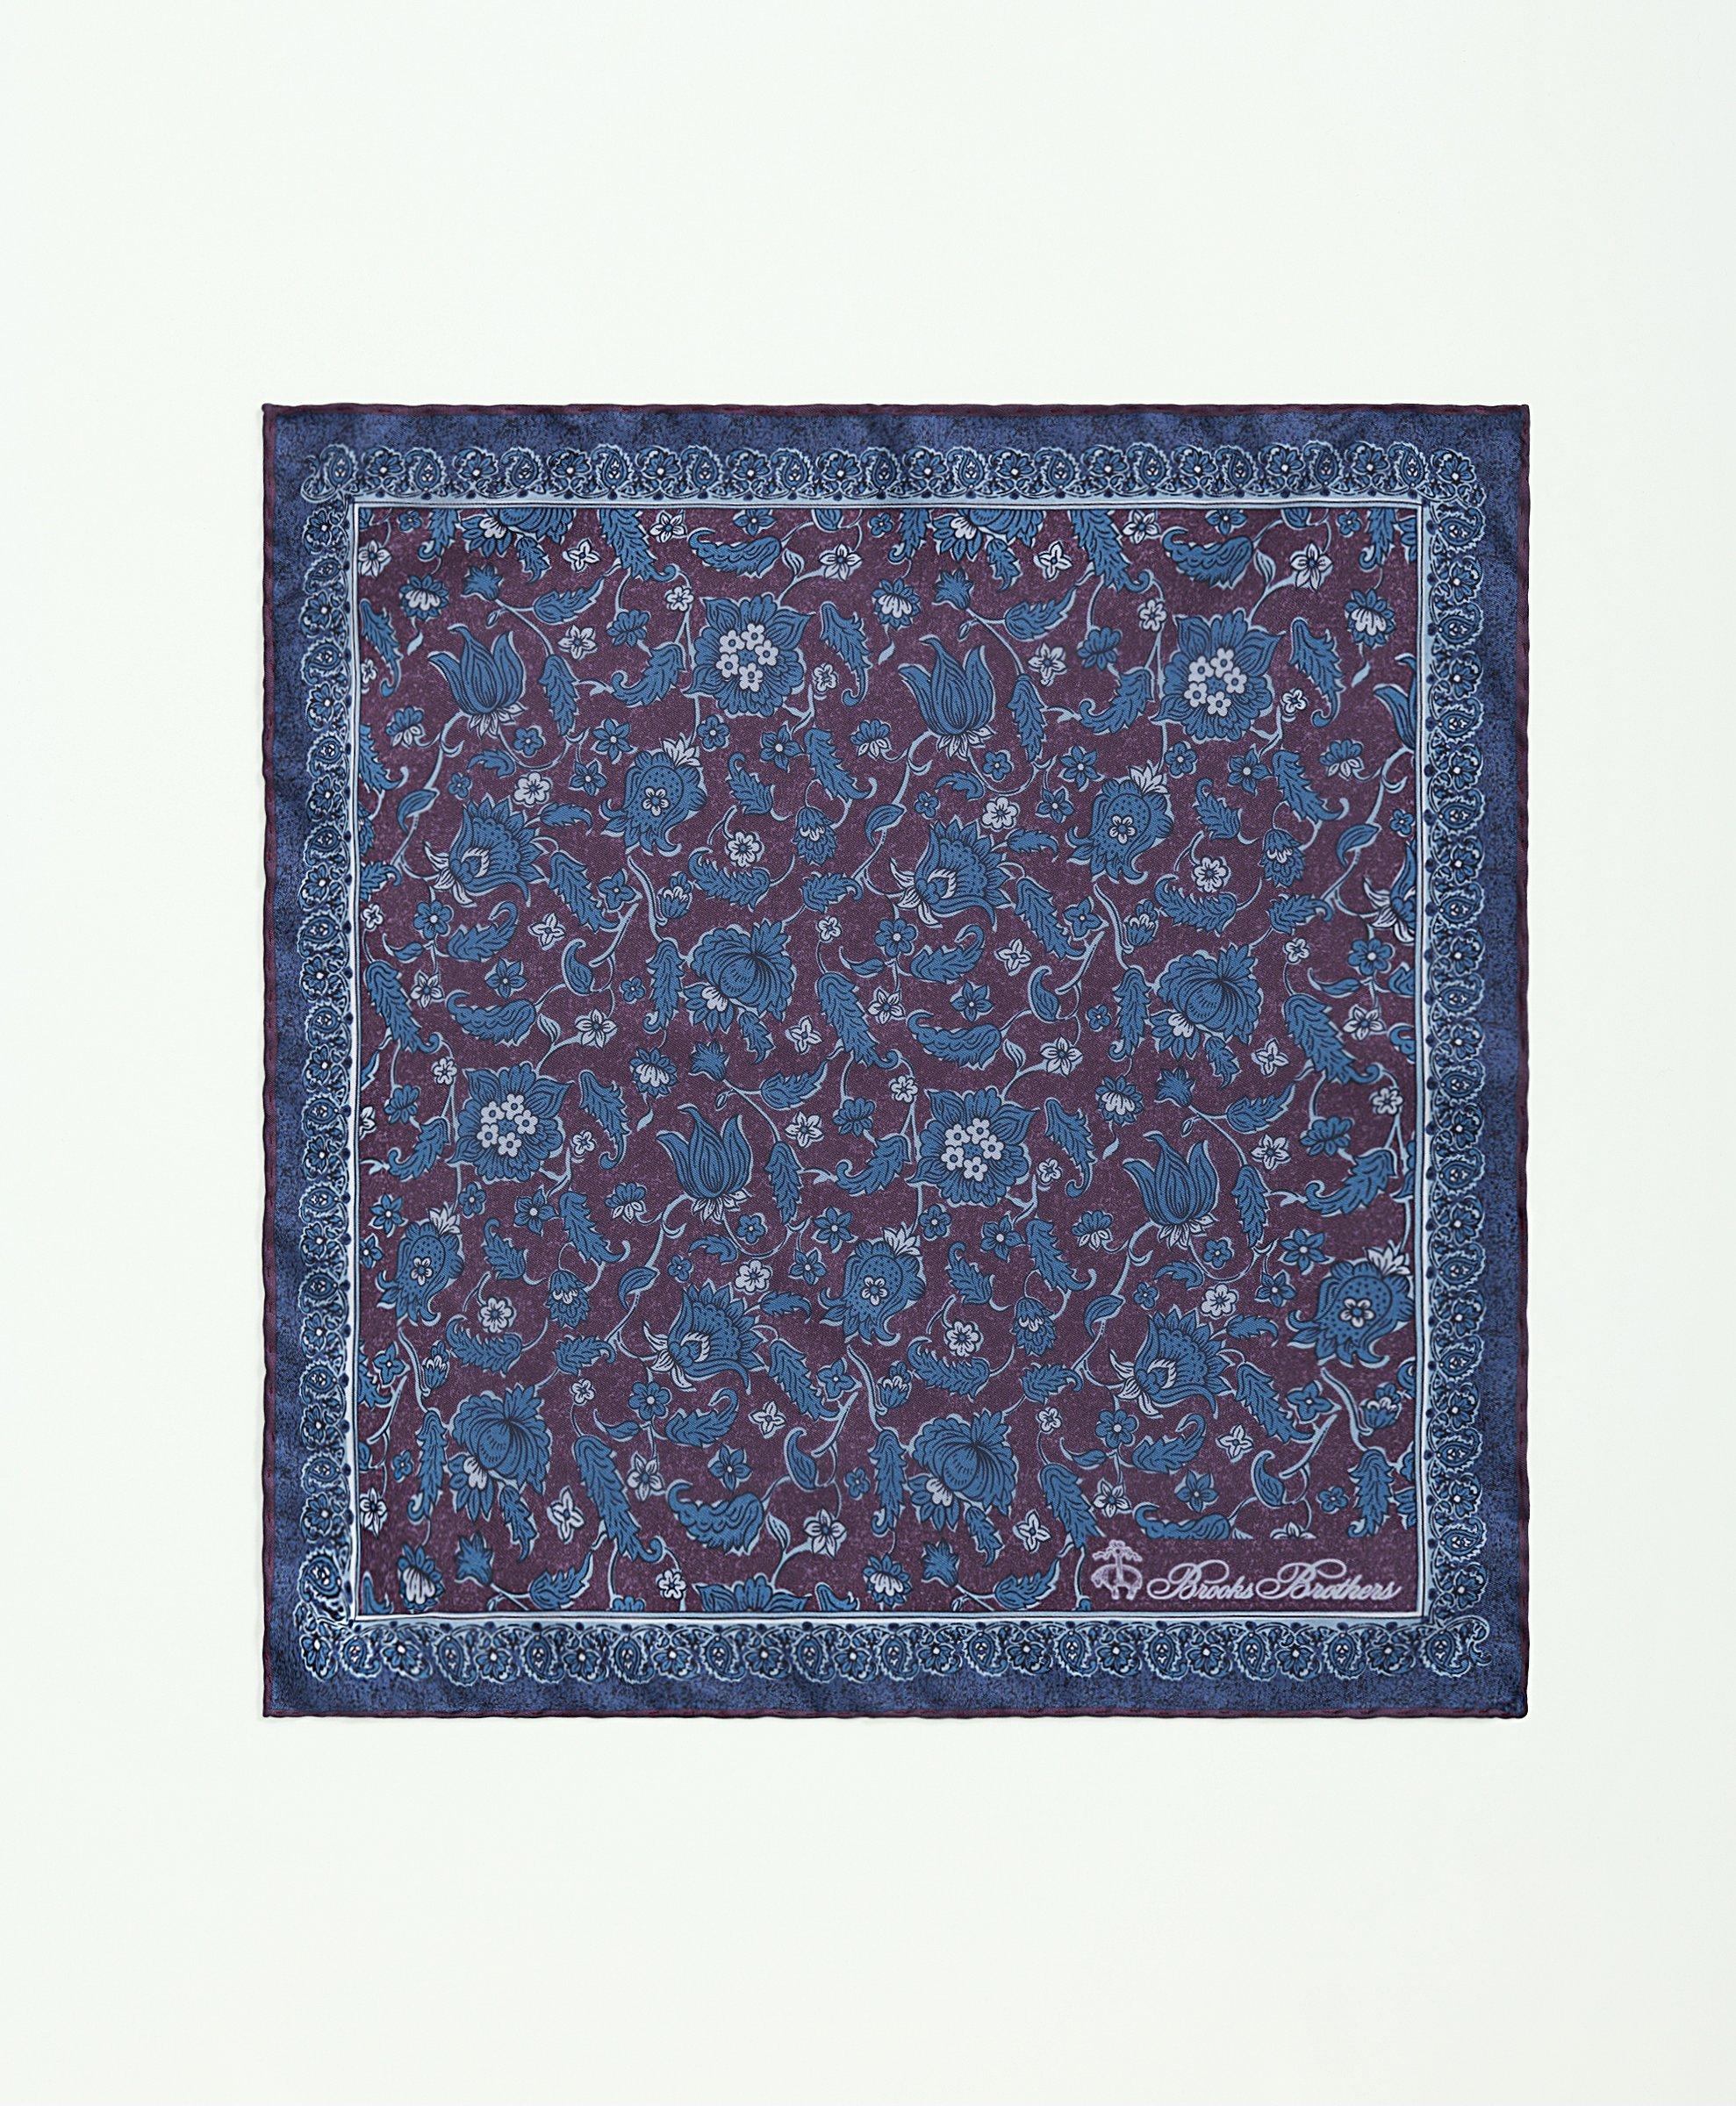 Louis Vuitton White Mix Violet Luxury Brand Carpet Rug Limited Edition